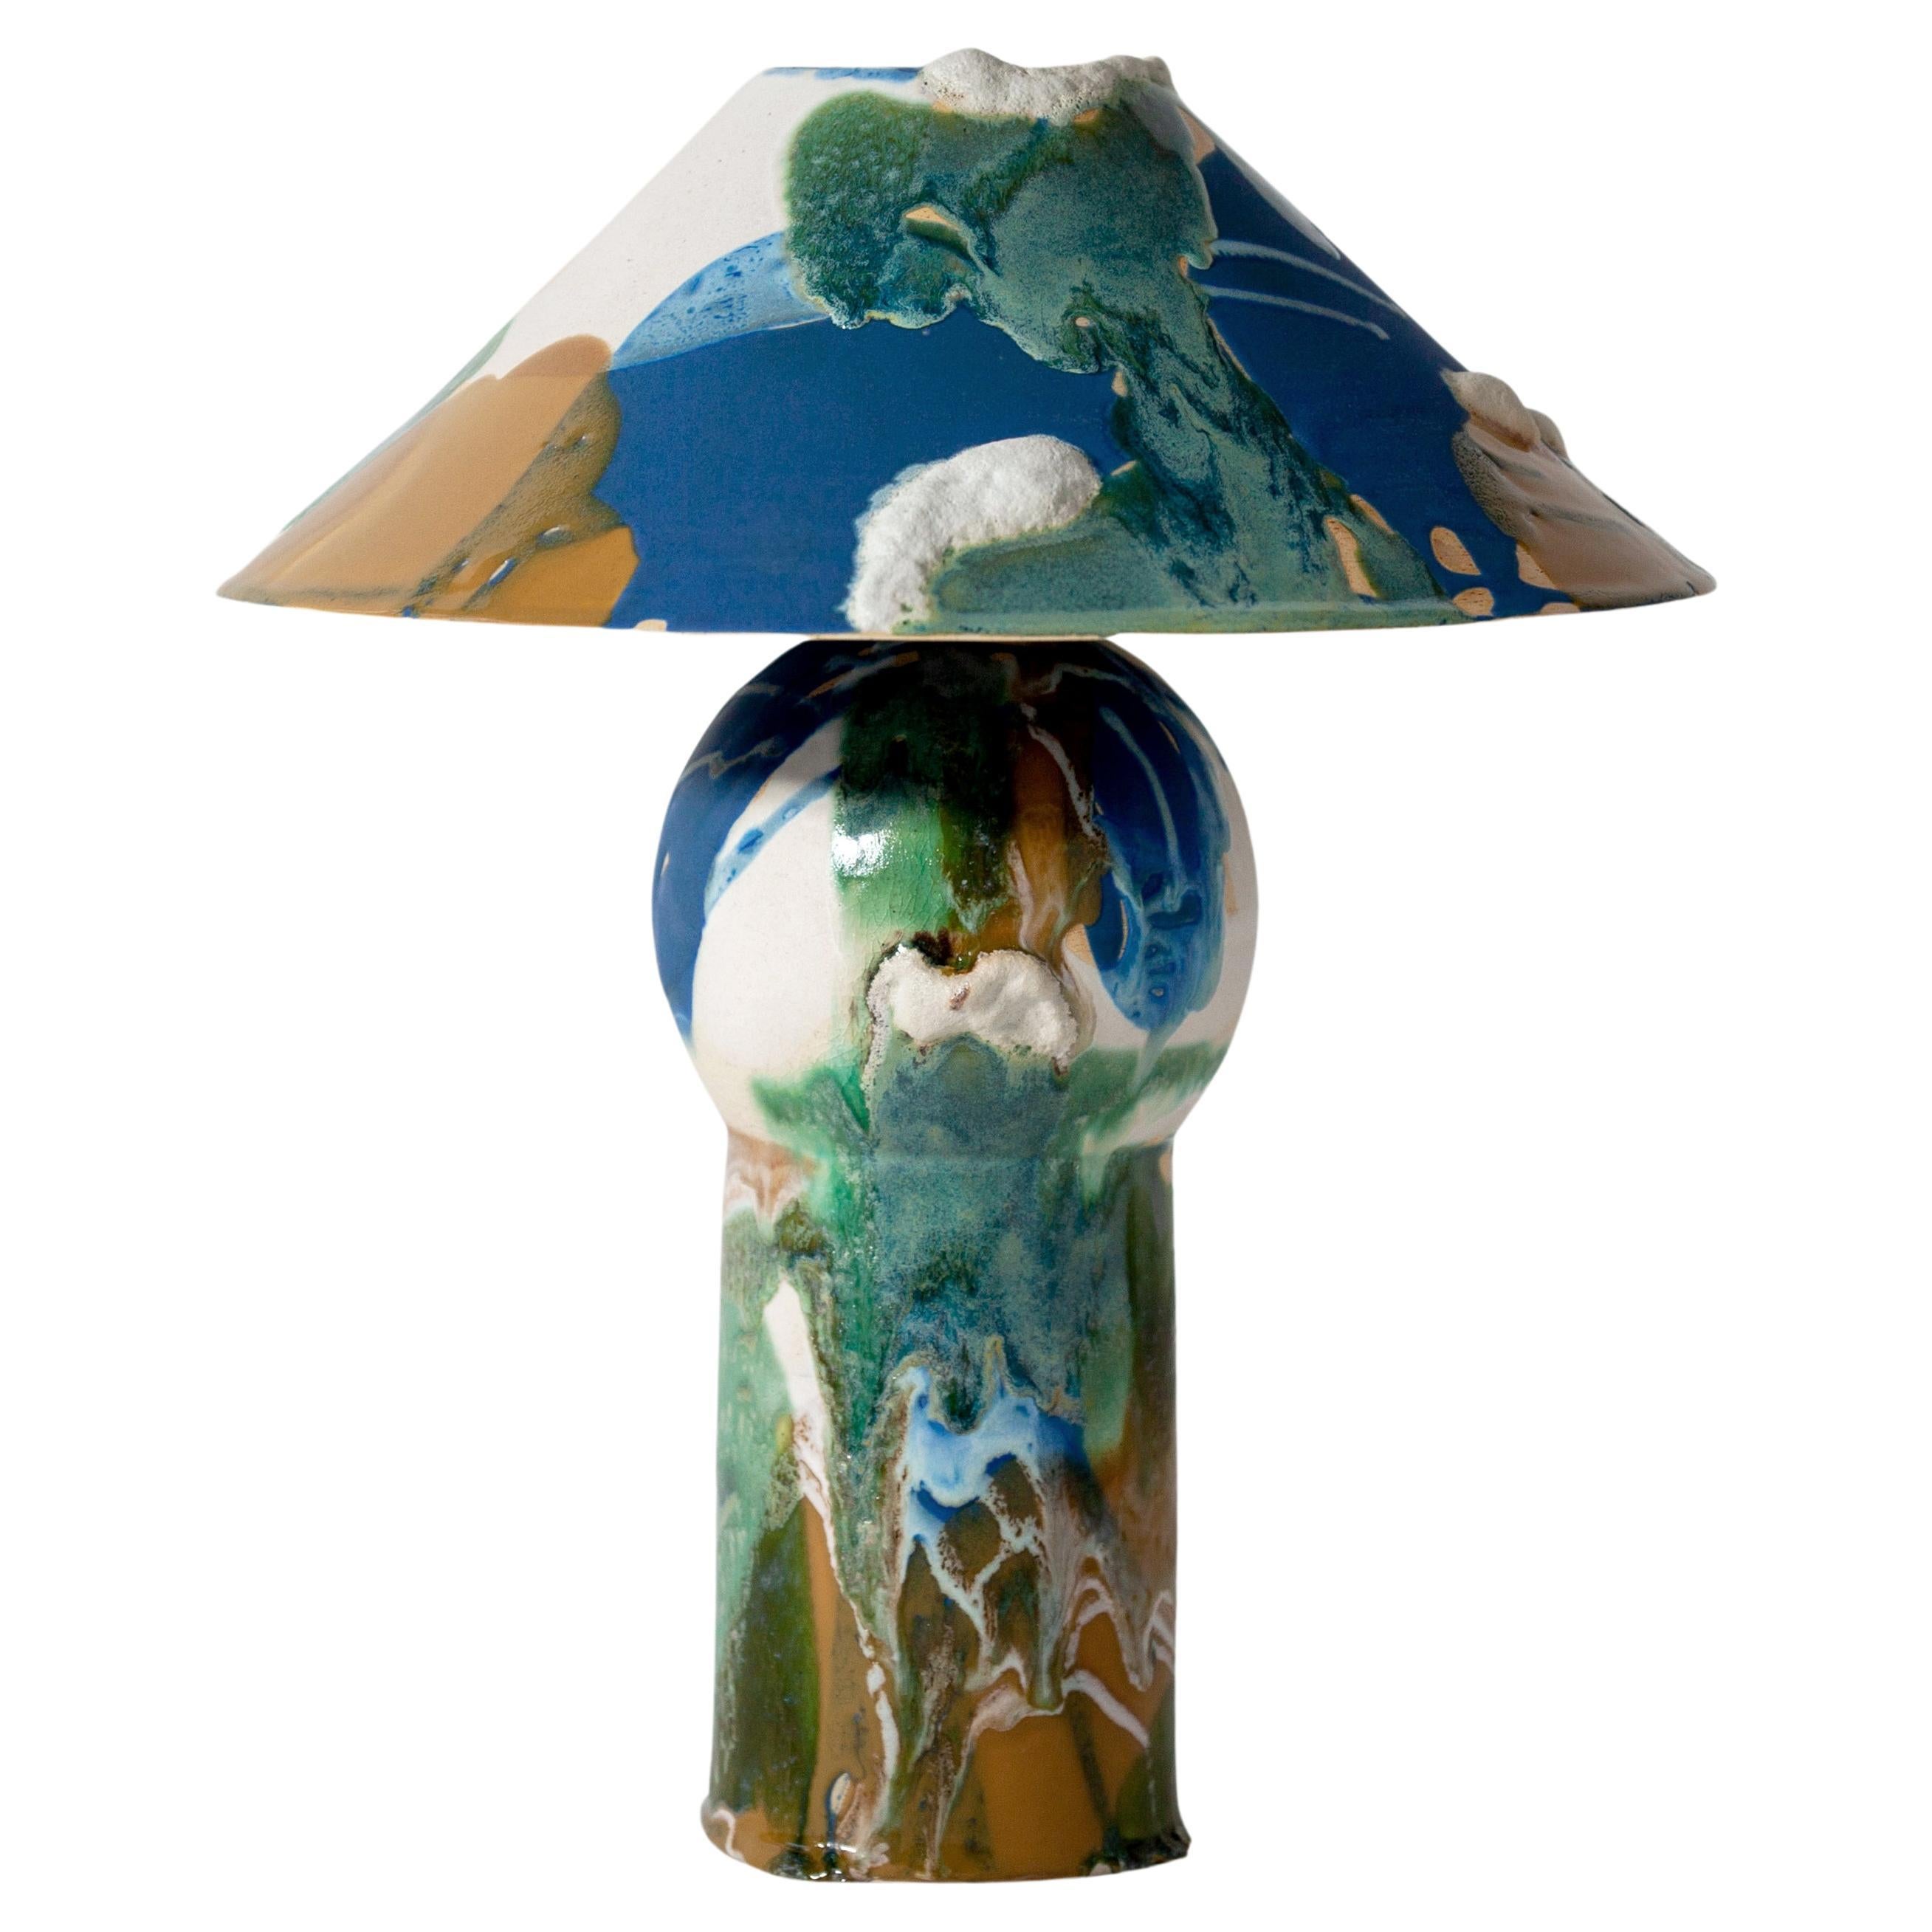 Ceramic Carousel Table Lamp by Episode Studio